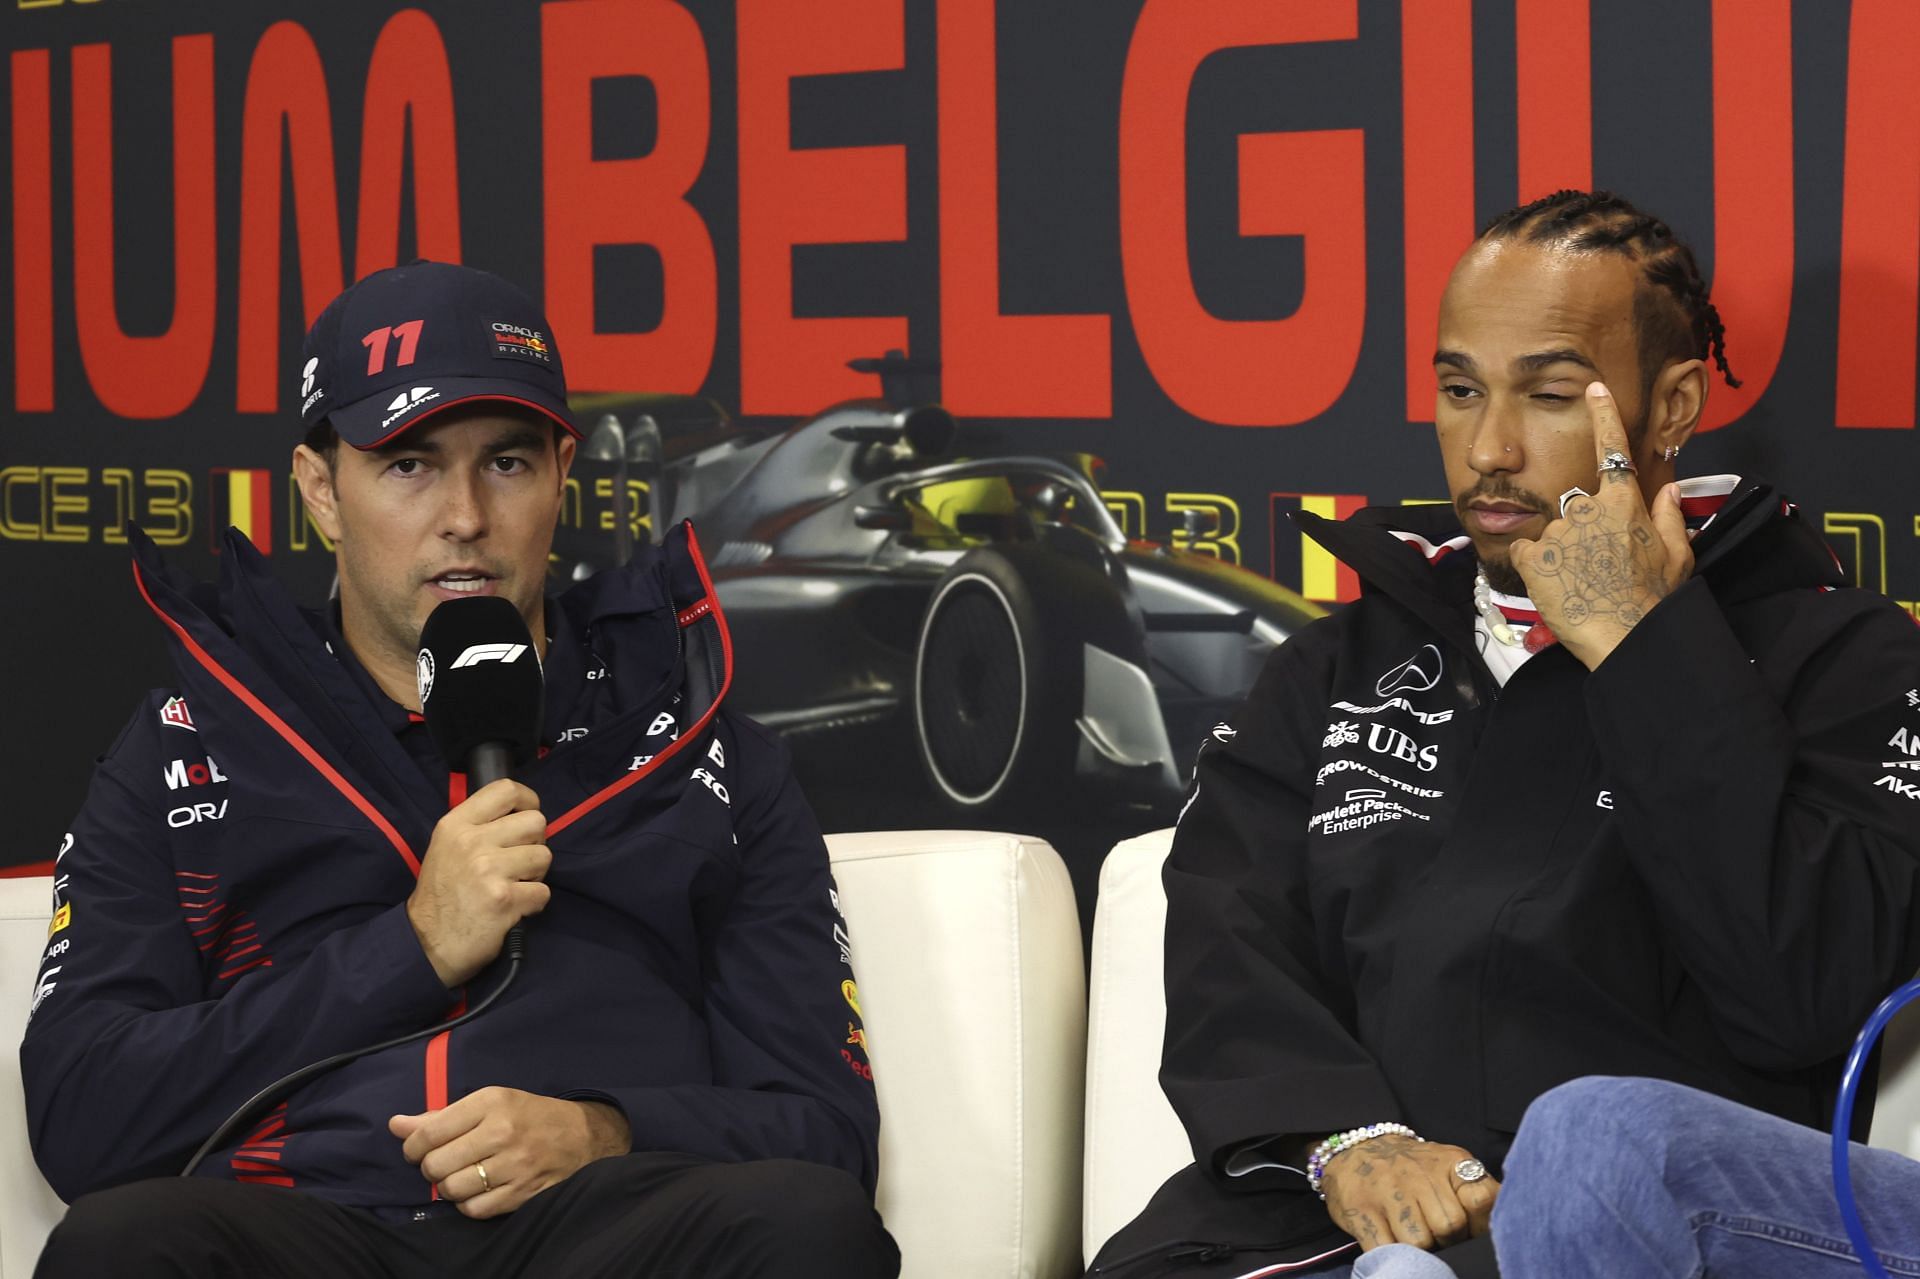 Belgium F1 GP Auto Racing - Sergio Perez and Lewis Hamilton